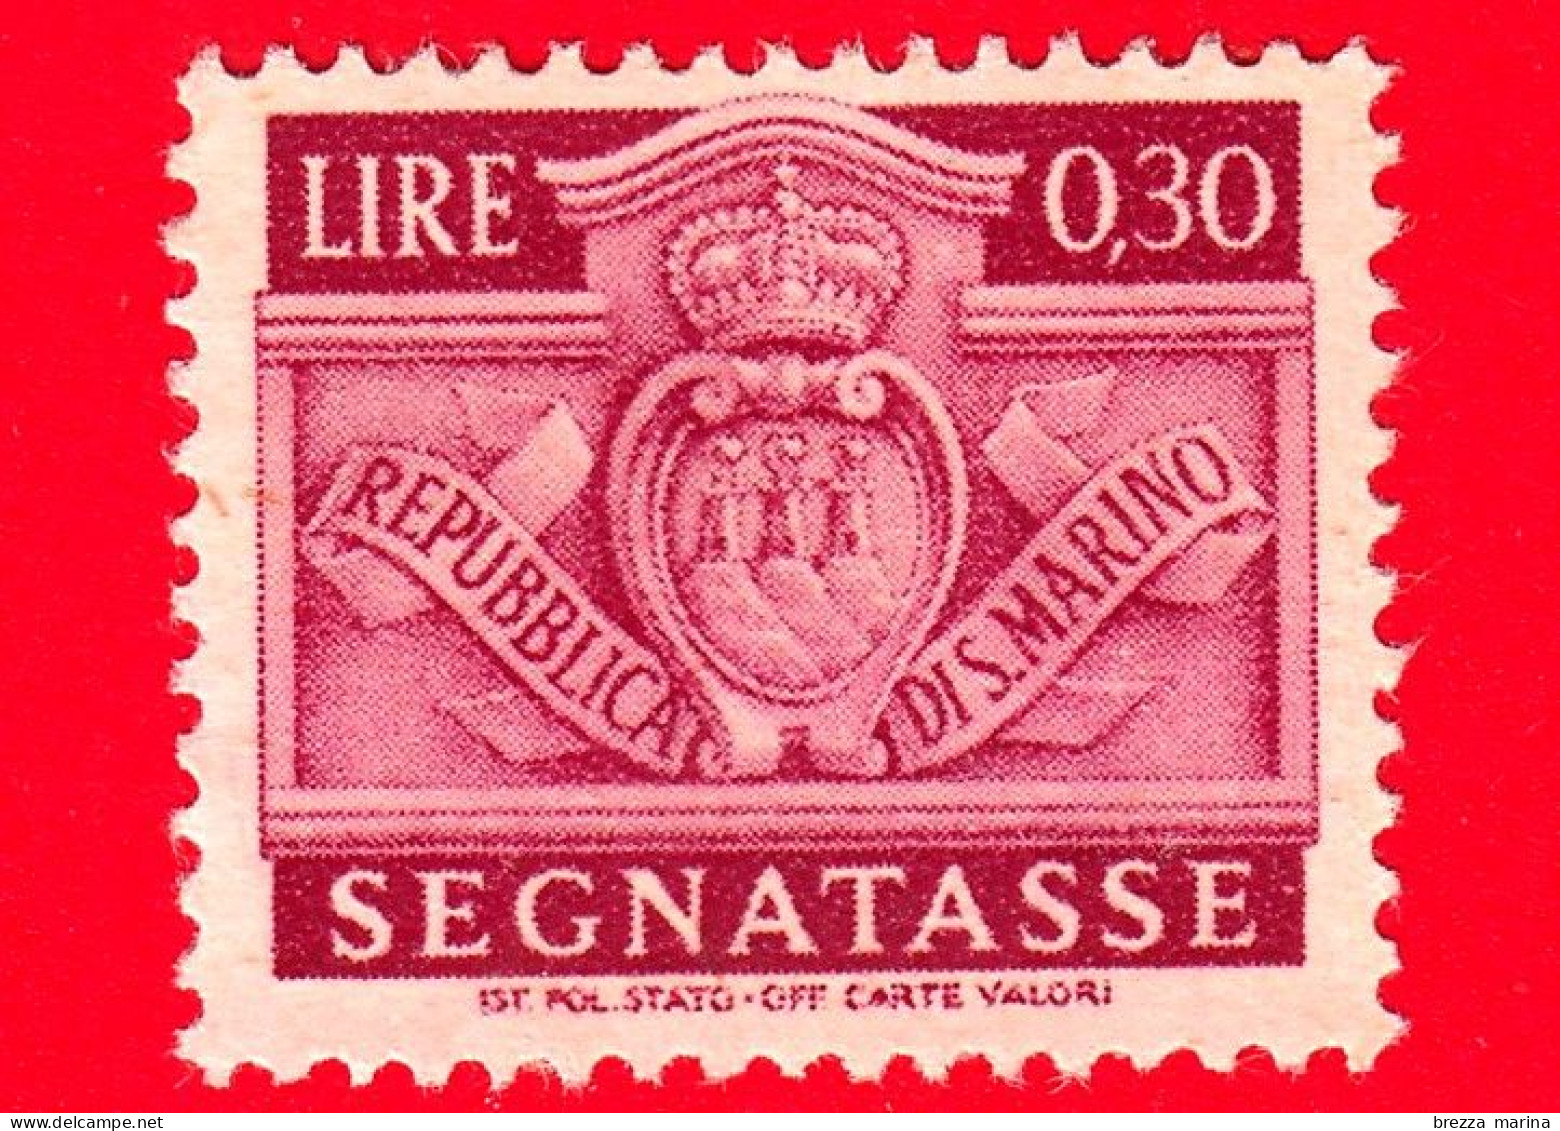 SAN MARINO -  Usato - 1945 - Stemma - Segnatasse -  Stemma Di San Marino - 0.30 - Impuestos